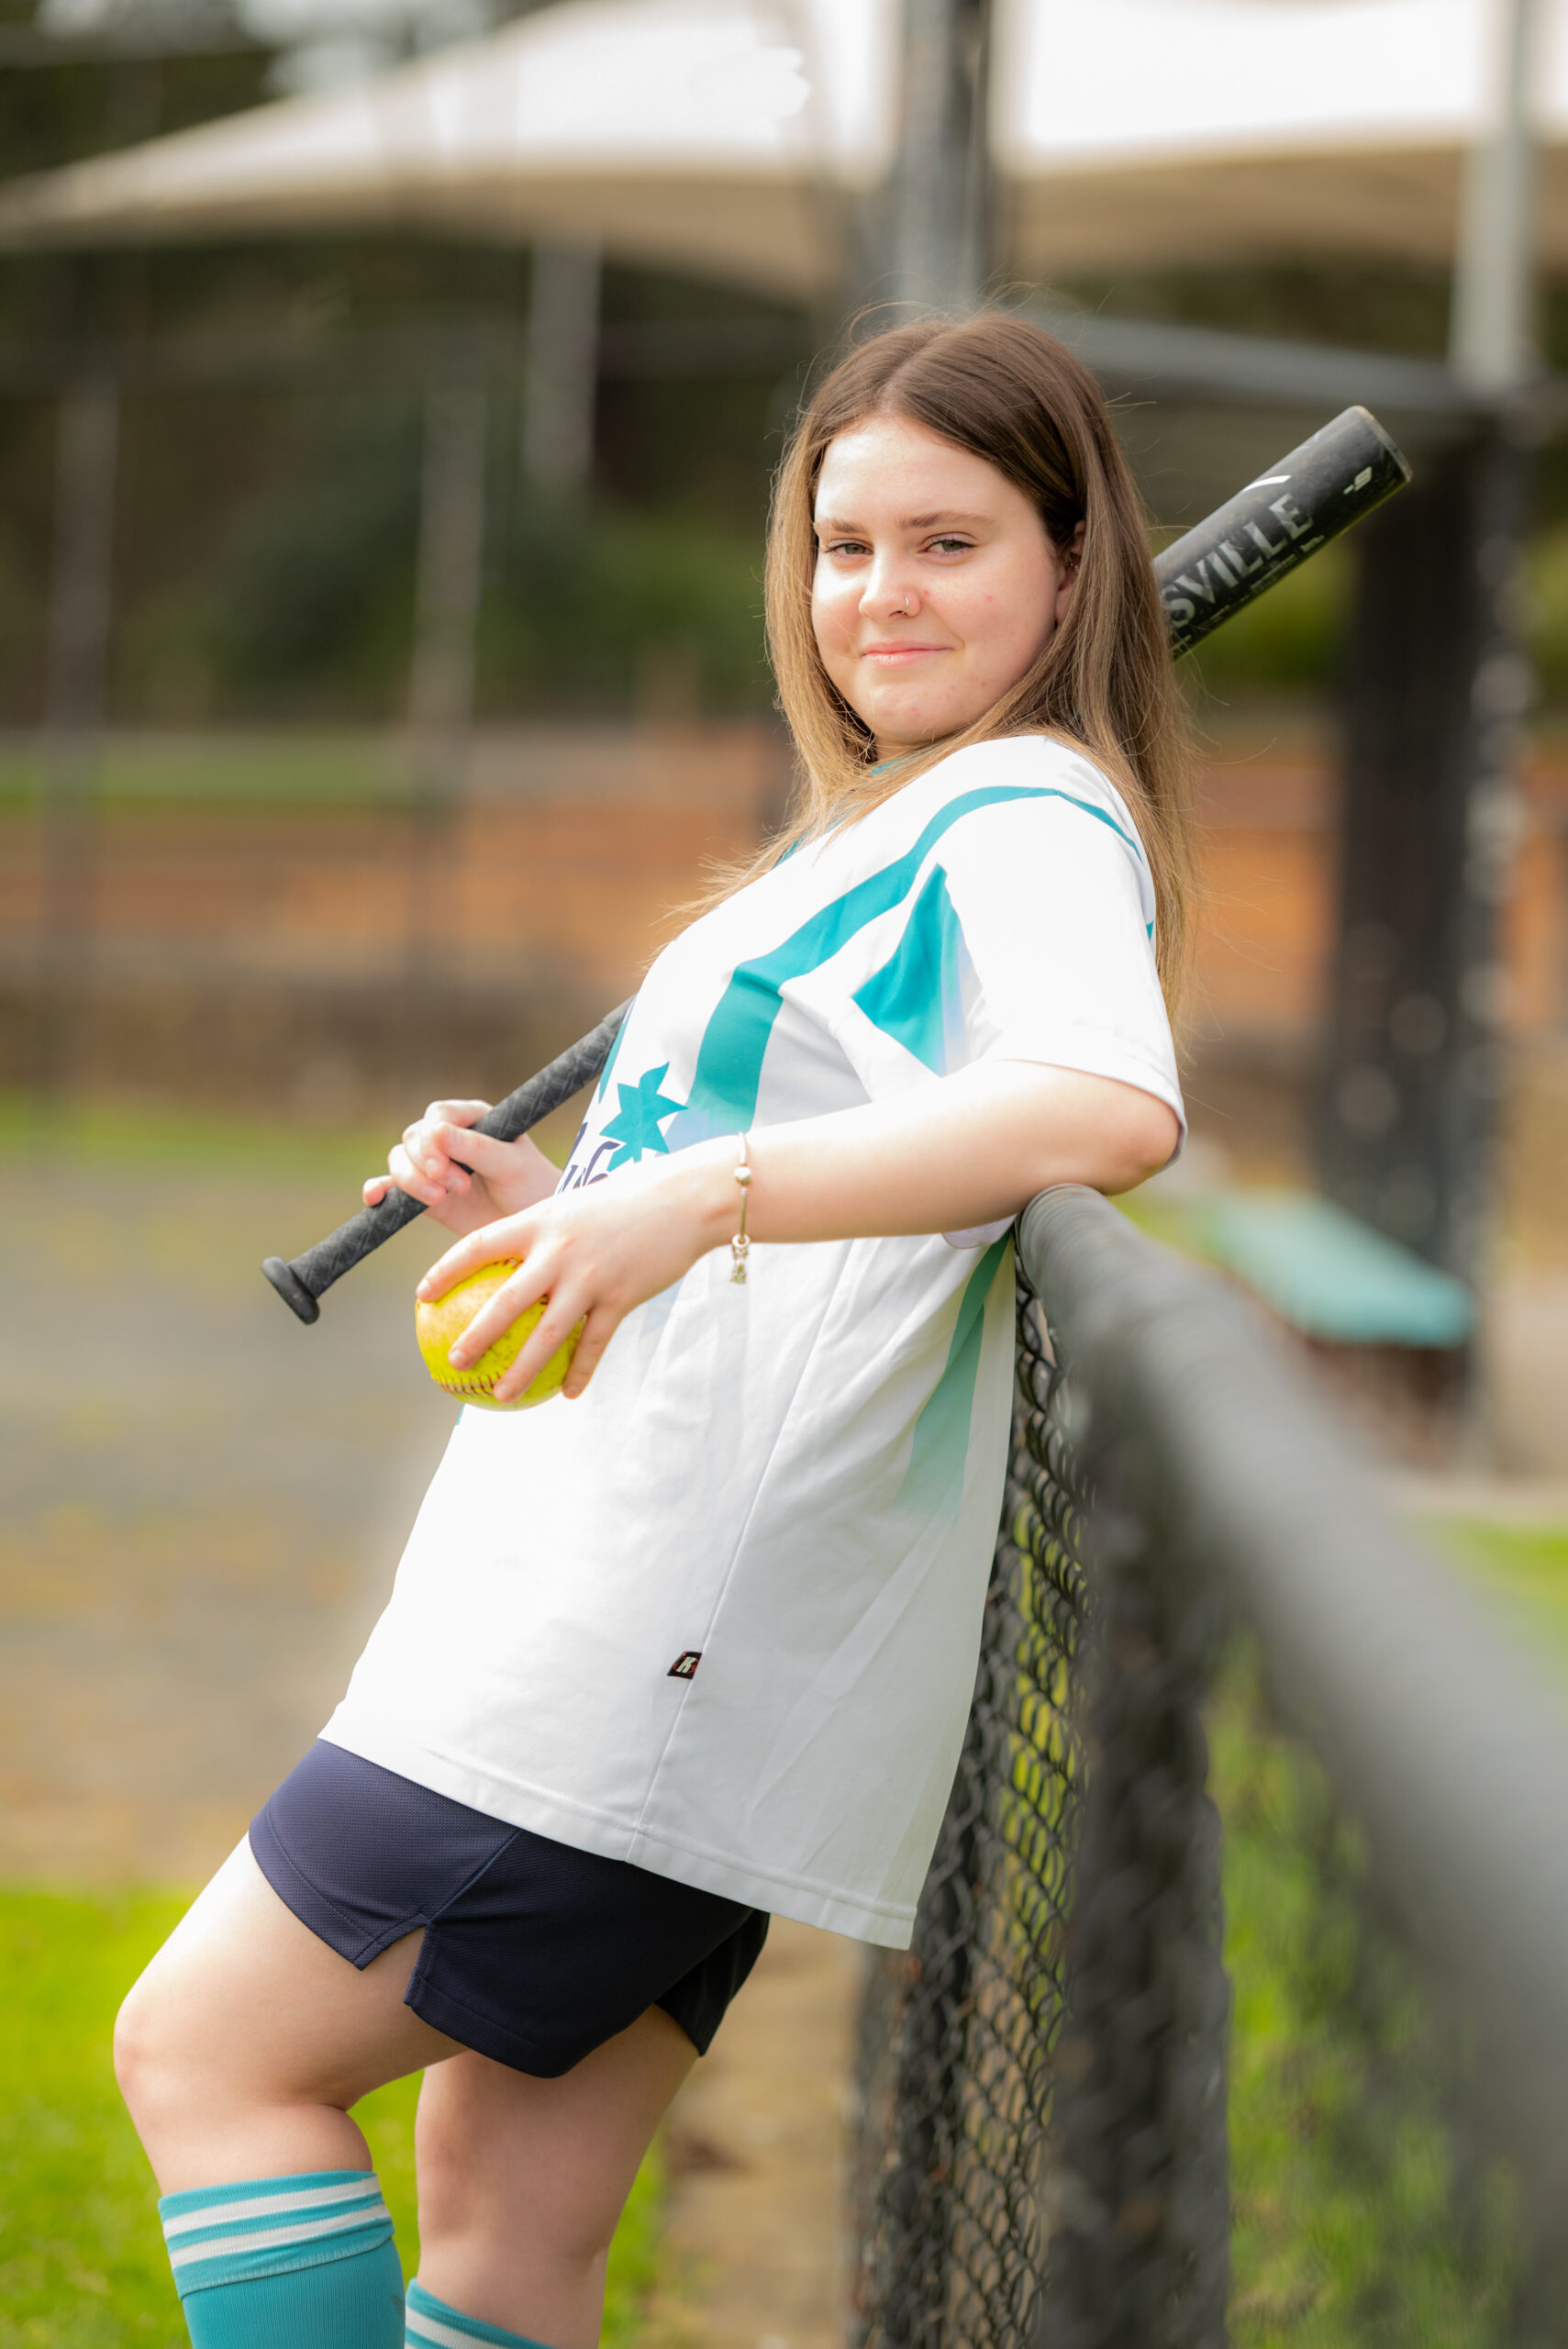 teen-girl-softball-player-leaning-fence